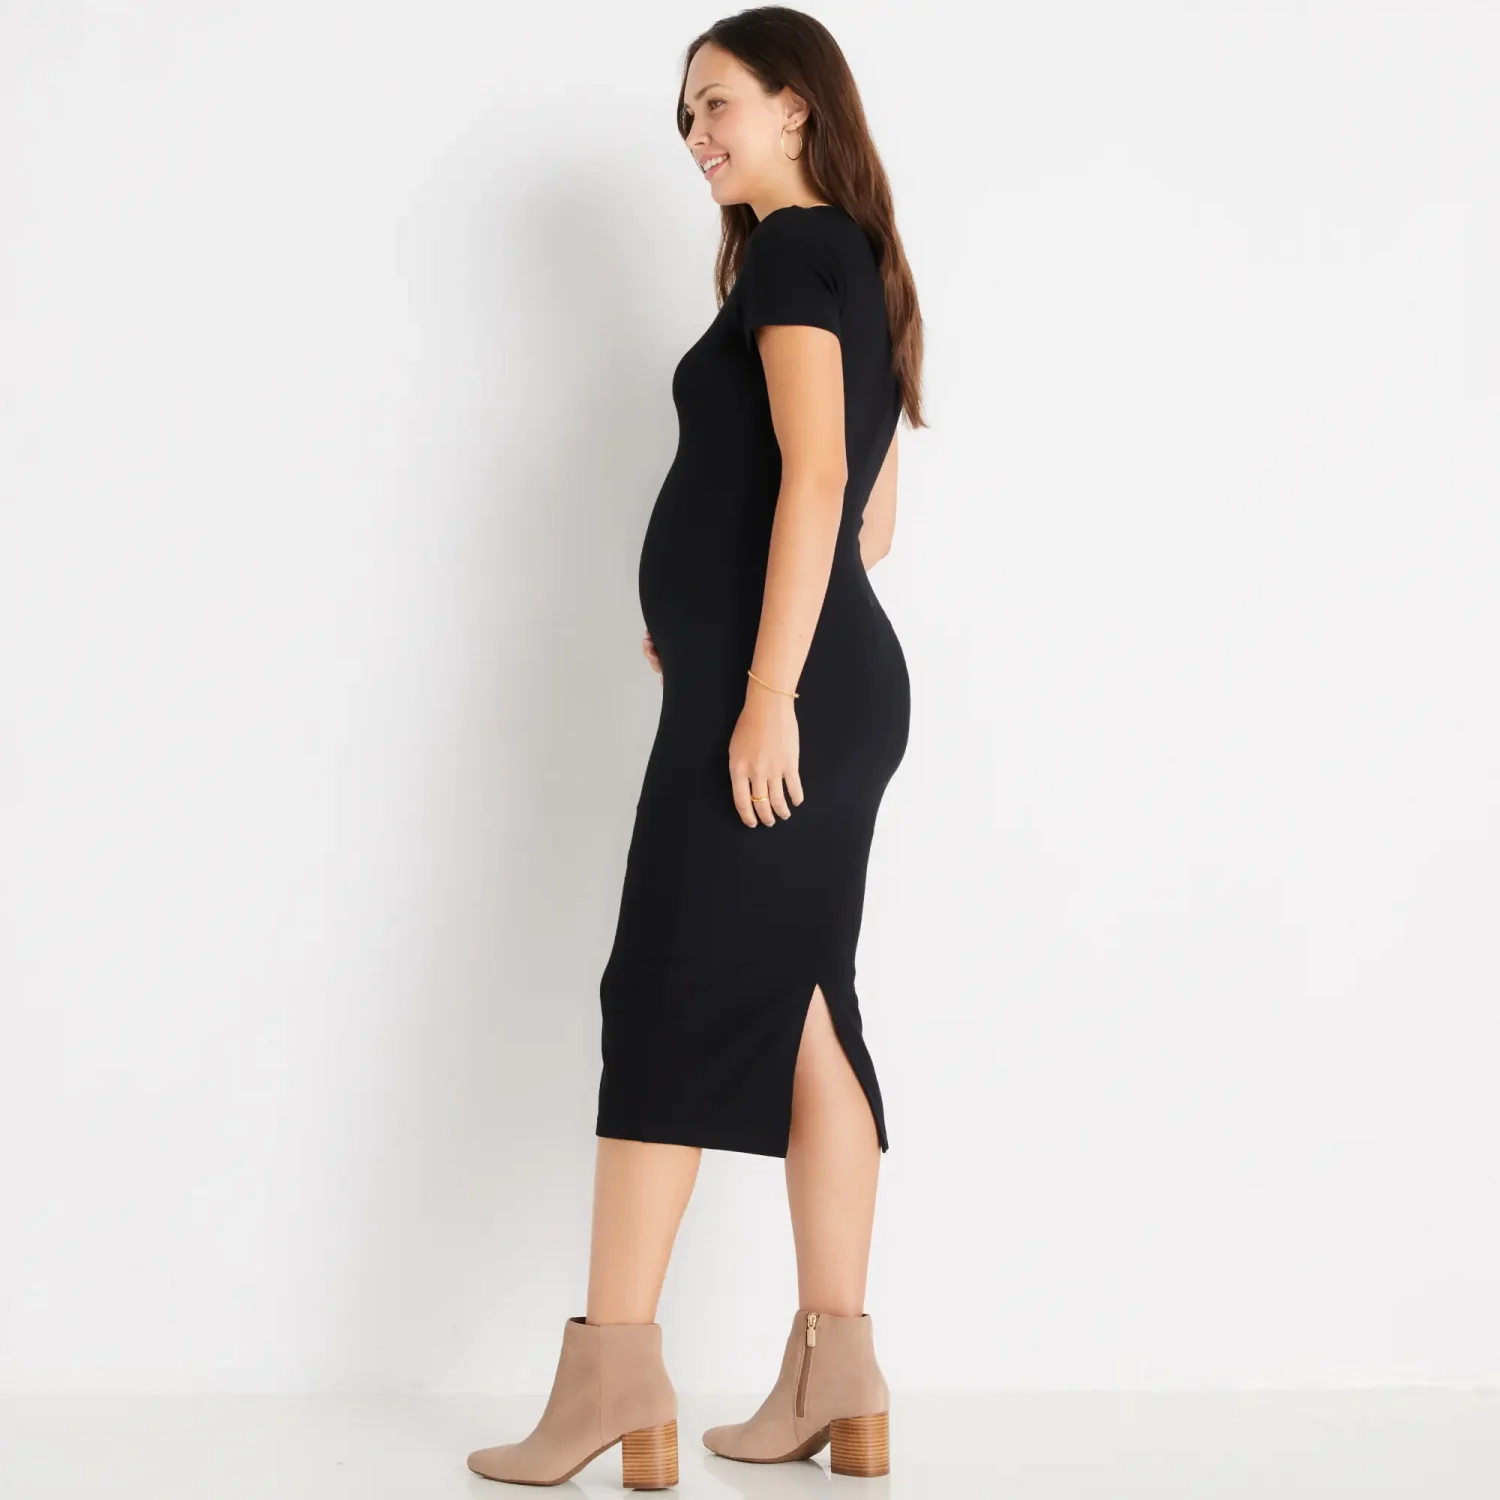 Marine Layer brand contemporary and stylish maternity friendly short sleeve black ribbed midi dress